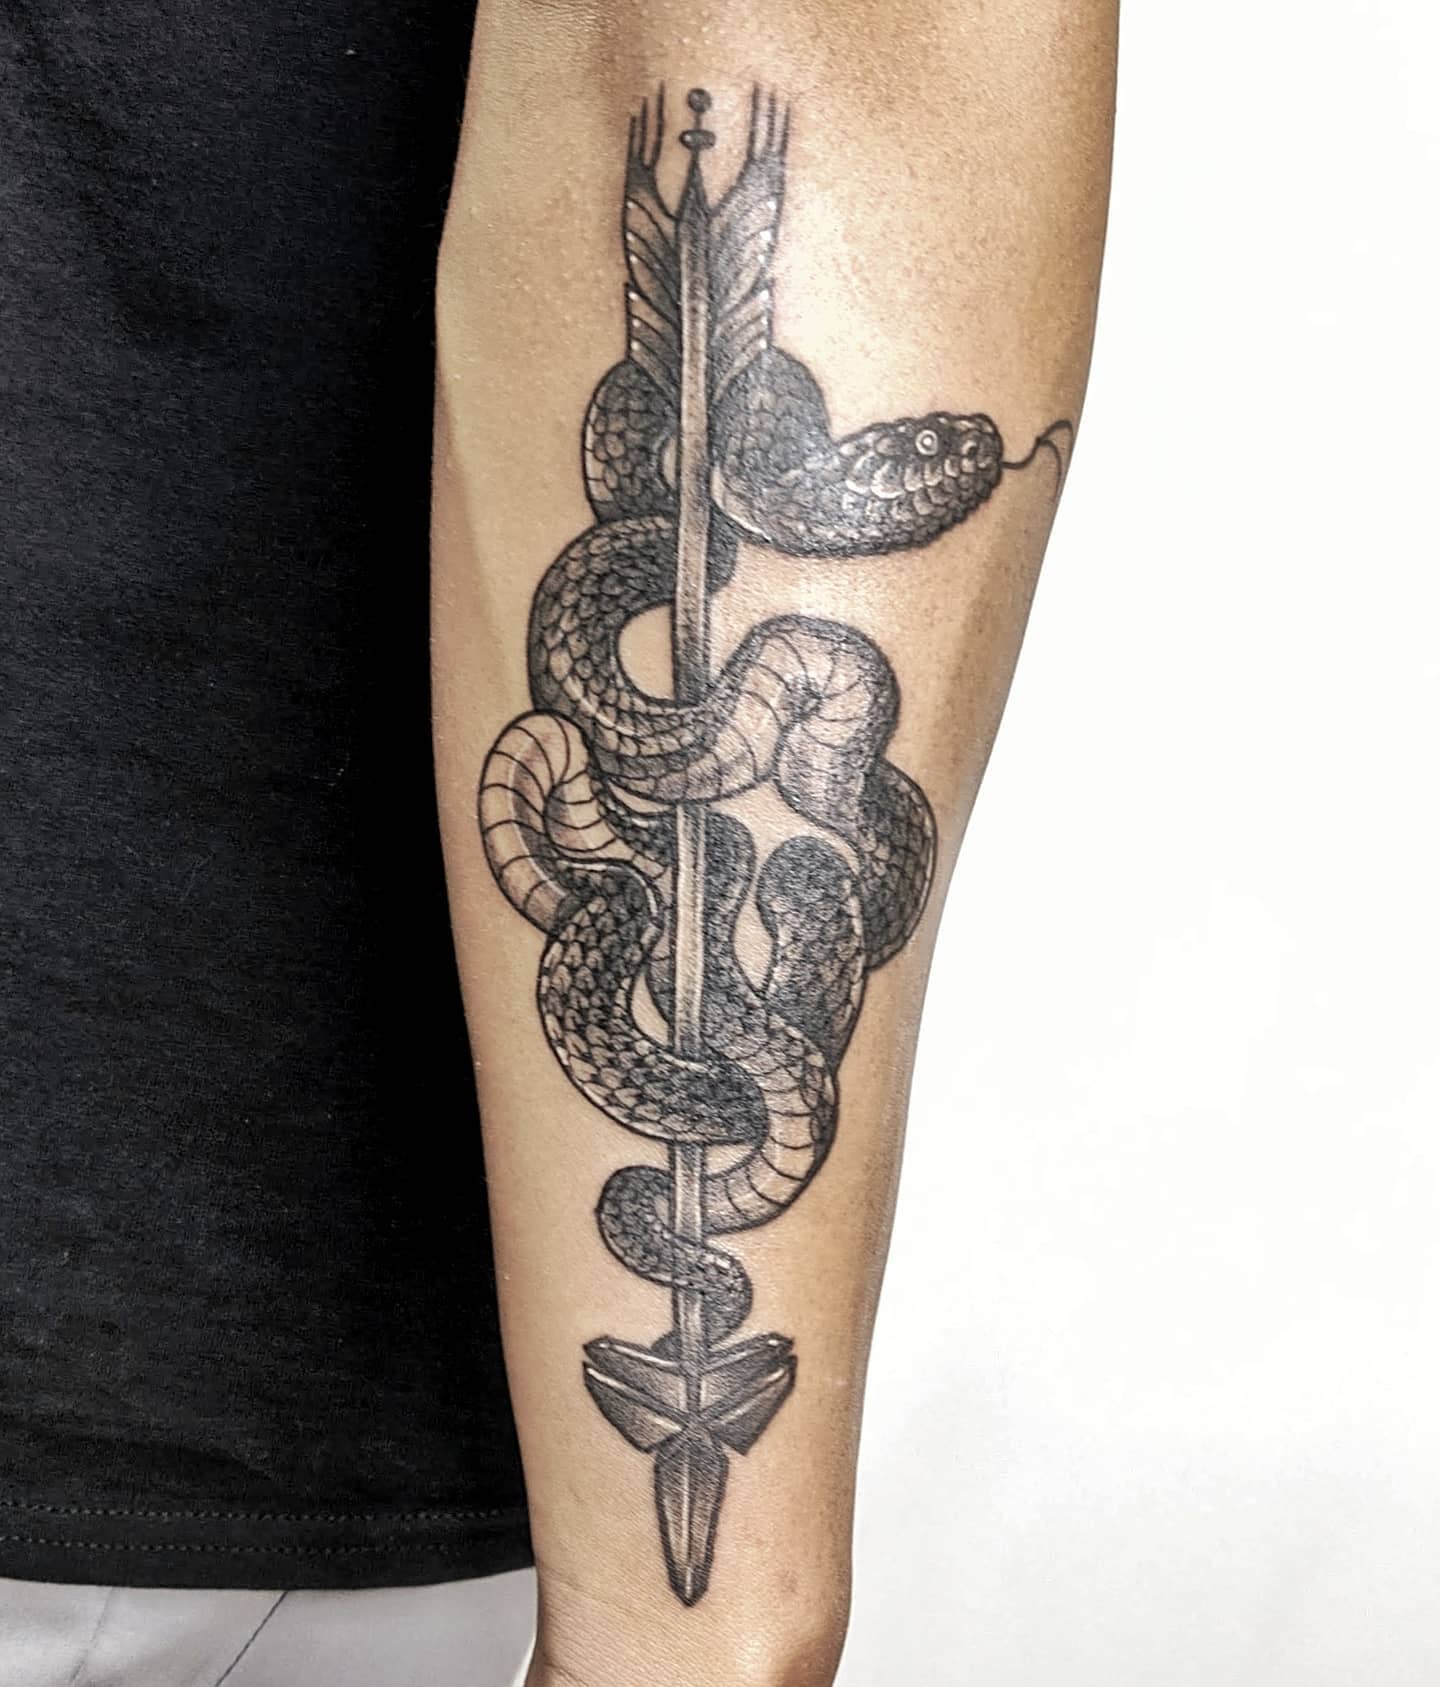 Artist tribalinktattoos     kobebryanttattoo kobebryant lakers  tribute kobe nba mambamentality tattoo inked  Instagram